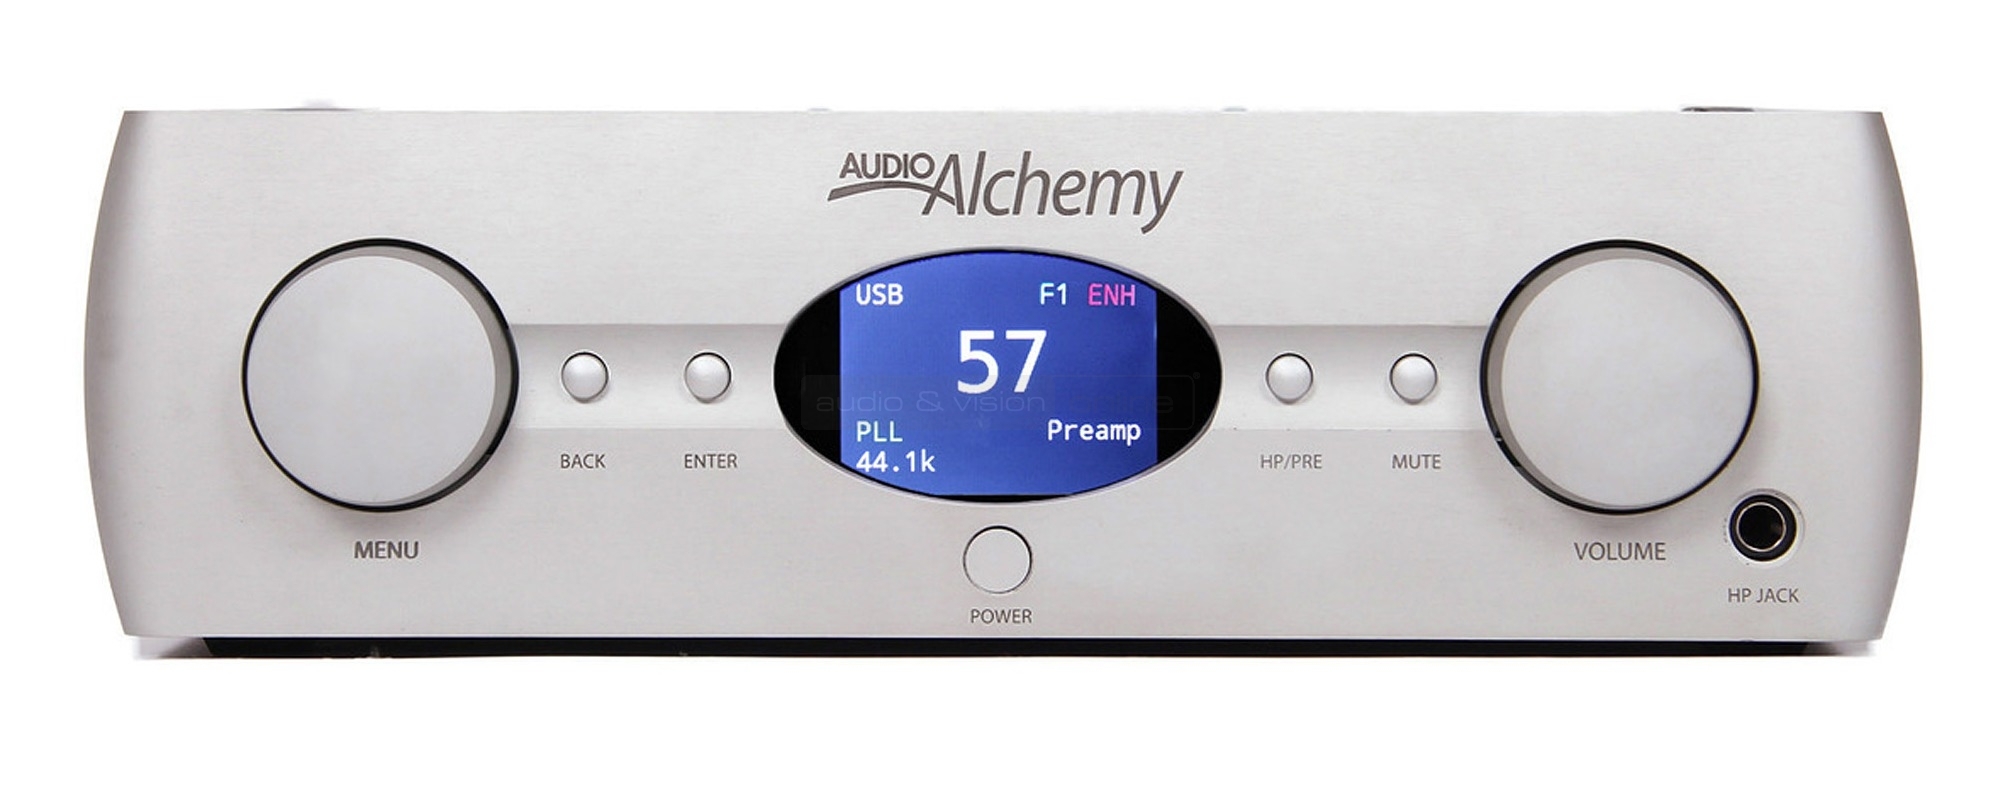 Audio Alchemy DDP-1